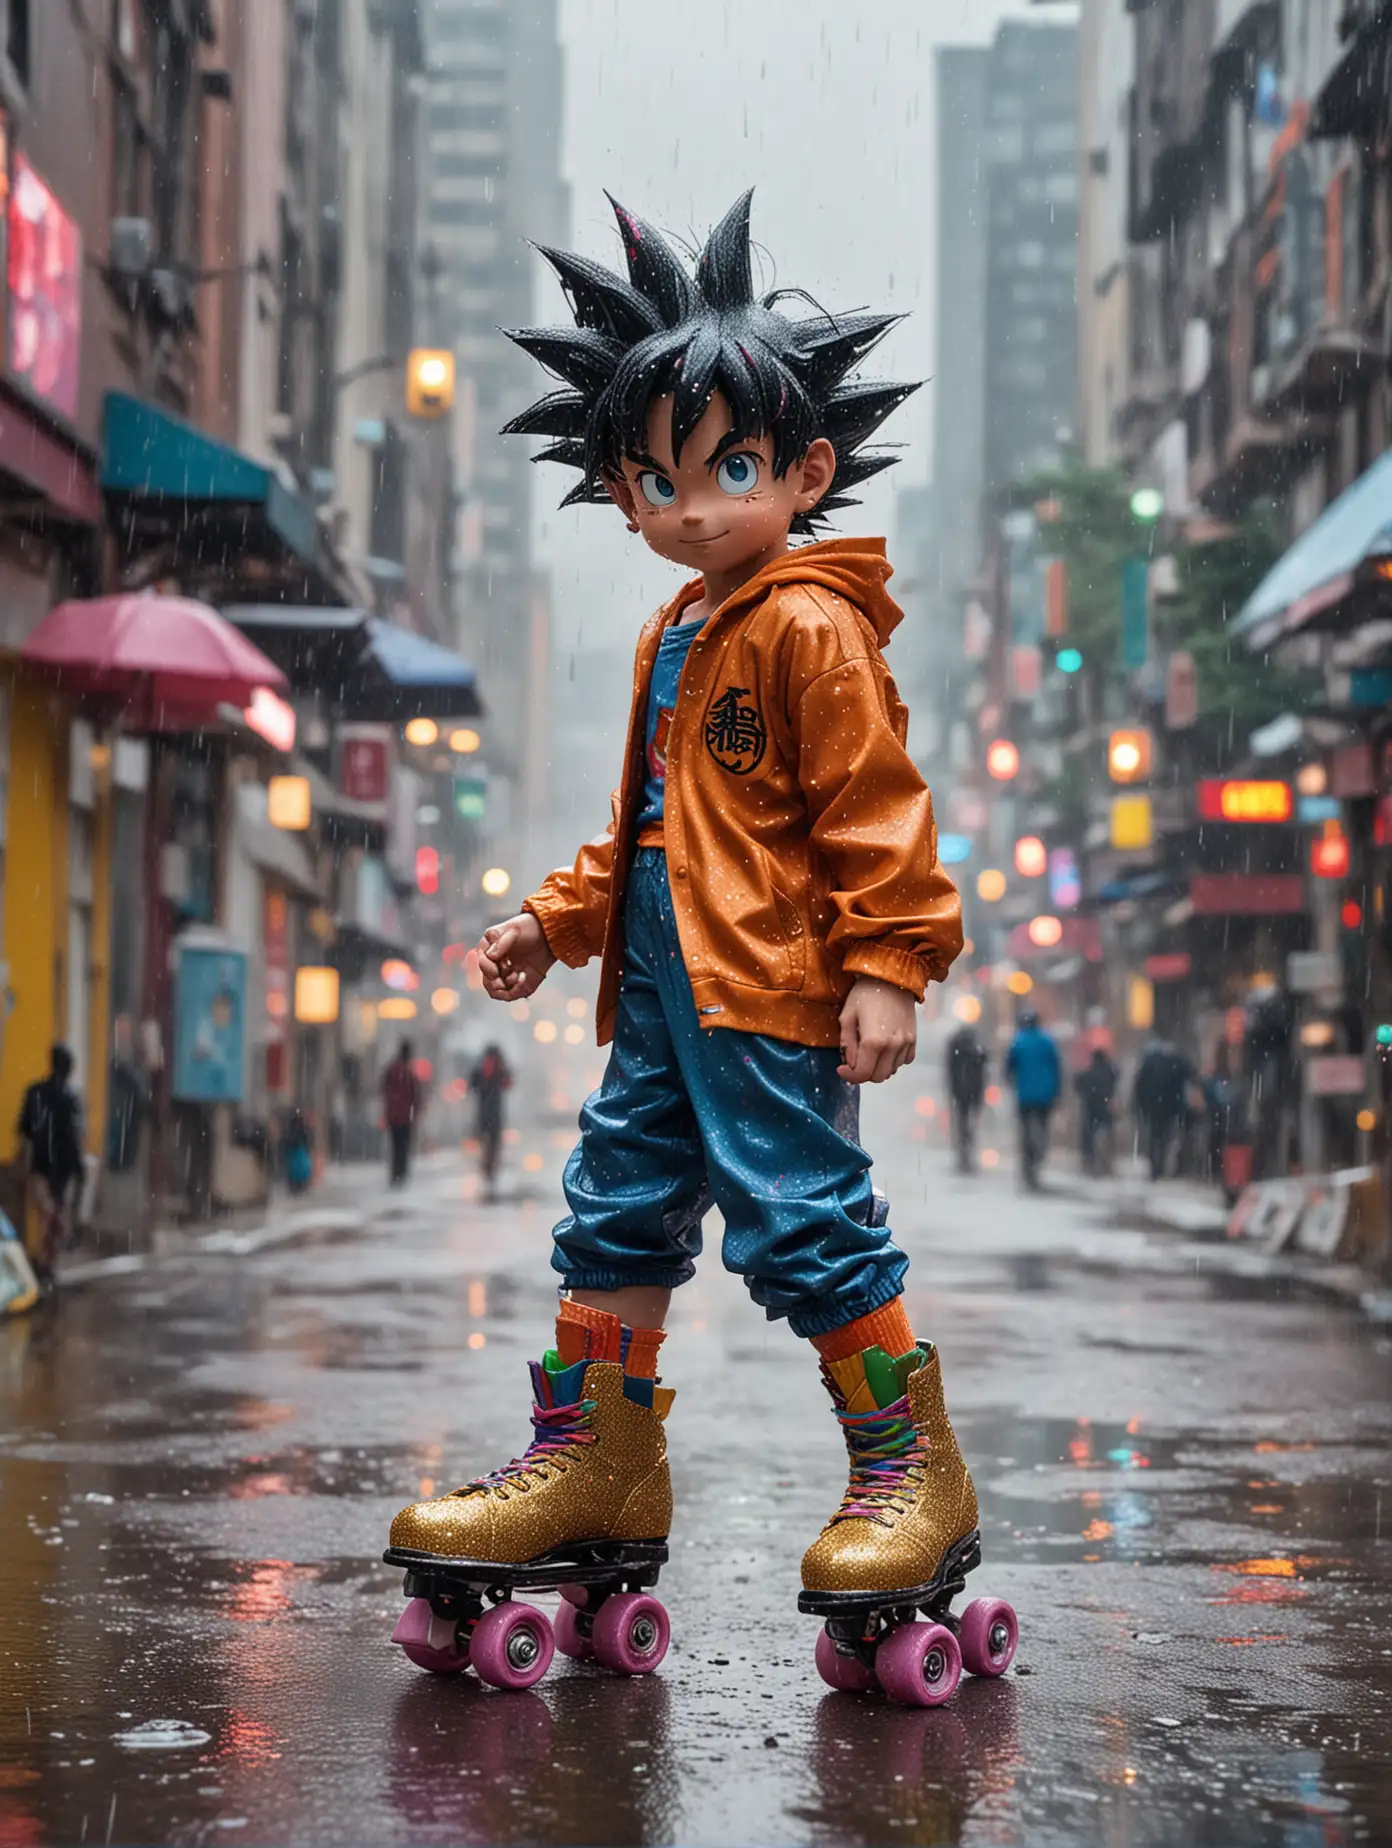 Goku Riding Glitter Rainbow Roller Skates in the City Rain